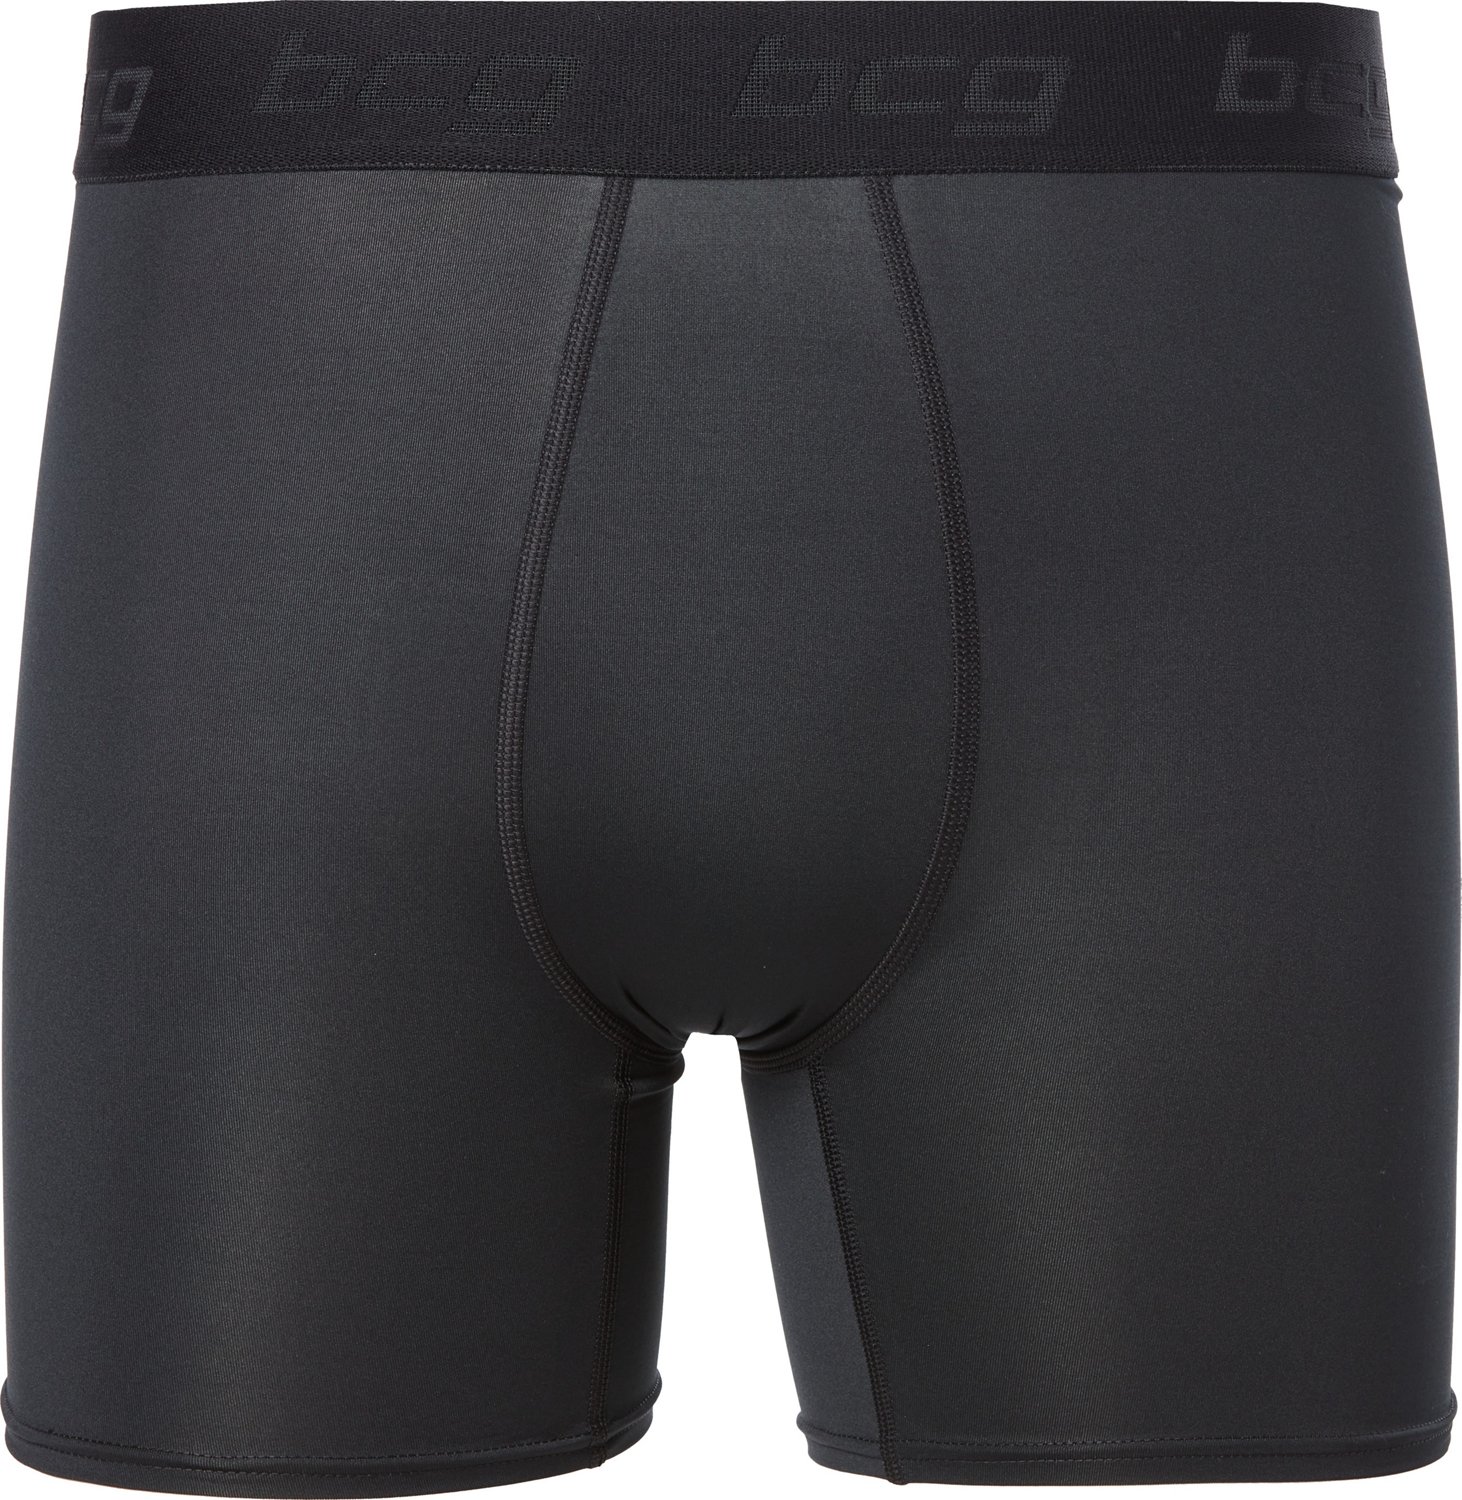 Mizuno Volleyball Spandex Shorts Hot Shorts Black Spandex Size